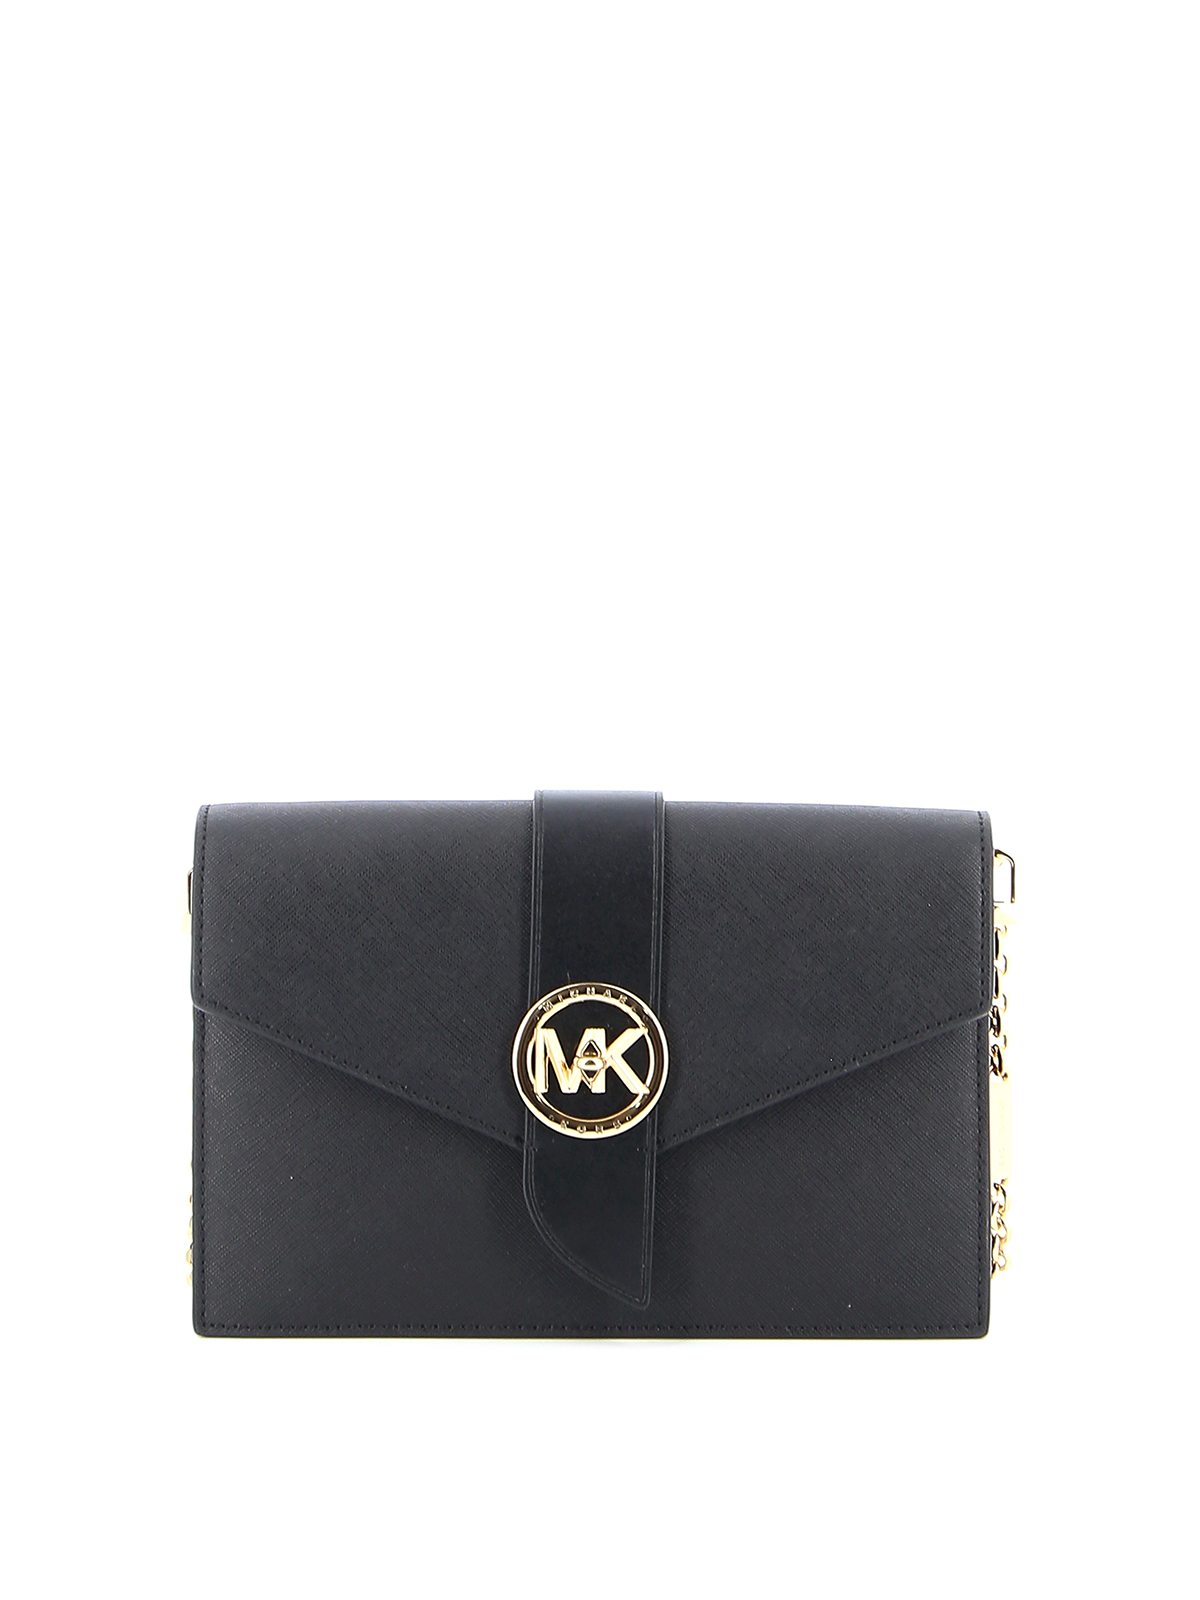 Mk Charm medium saffiano leather bag 